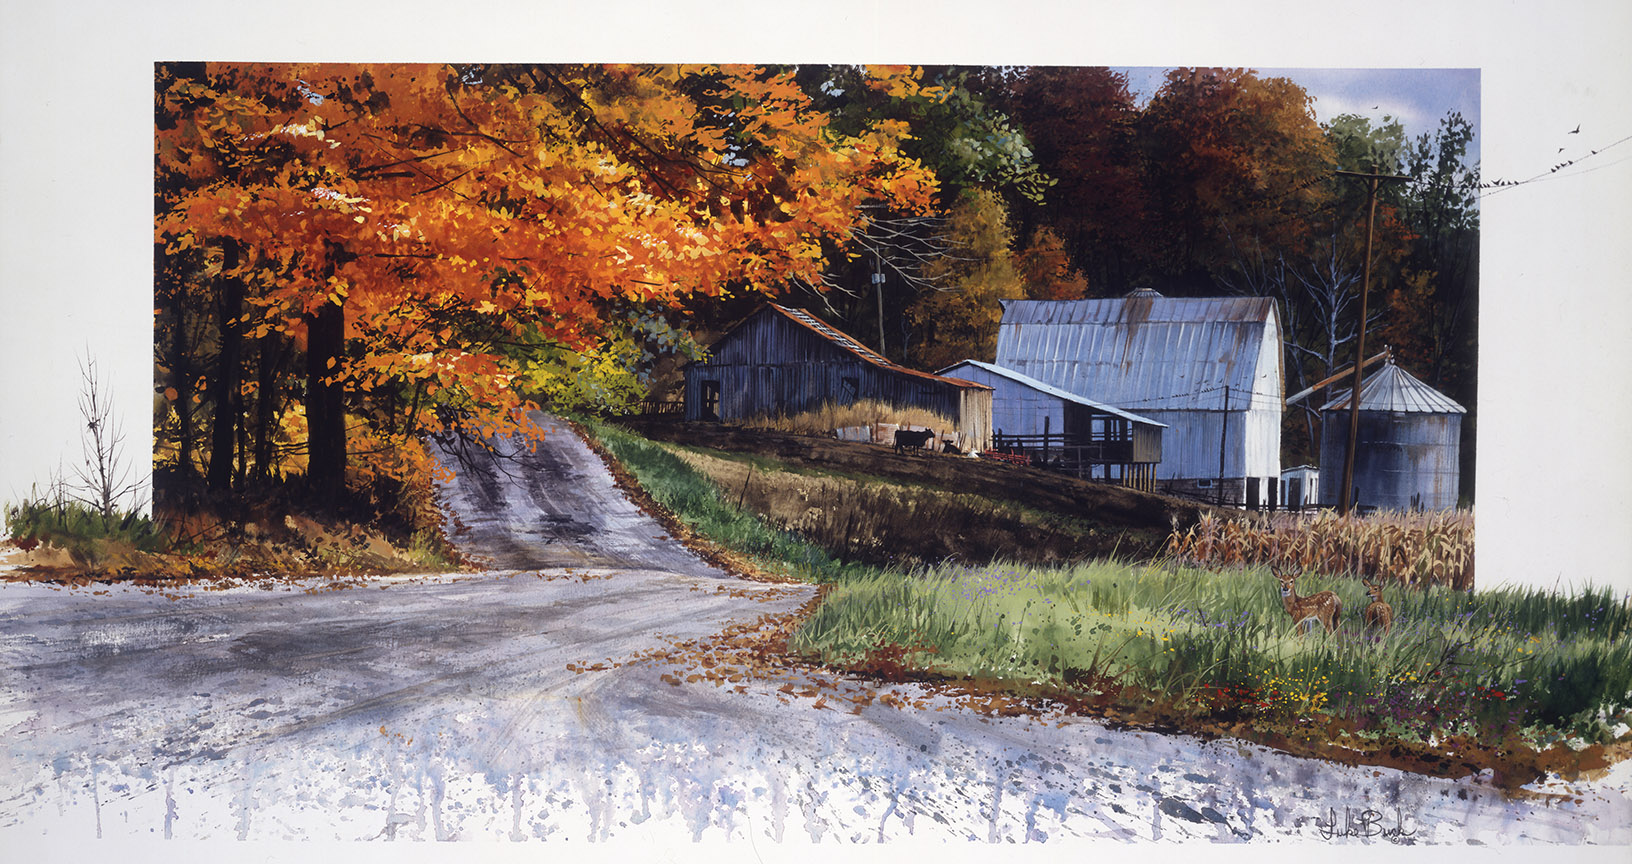 LB – Rural America – A Country Road 9711 © Luke Buck